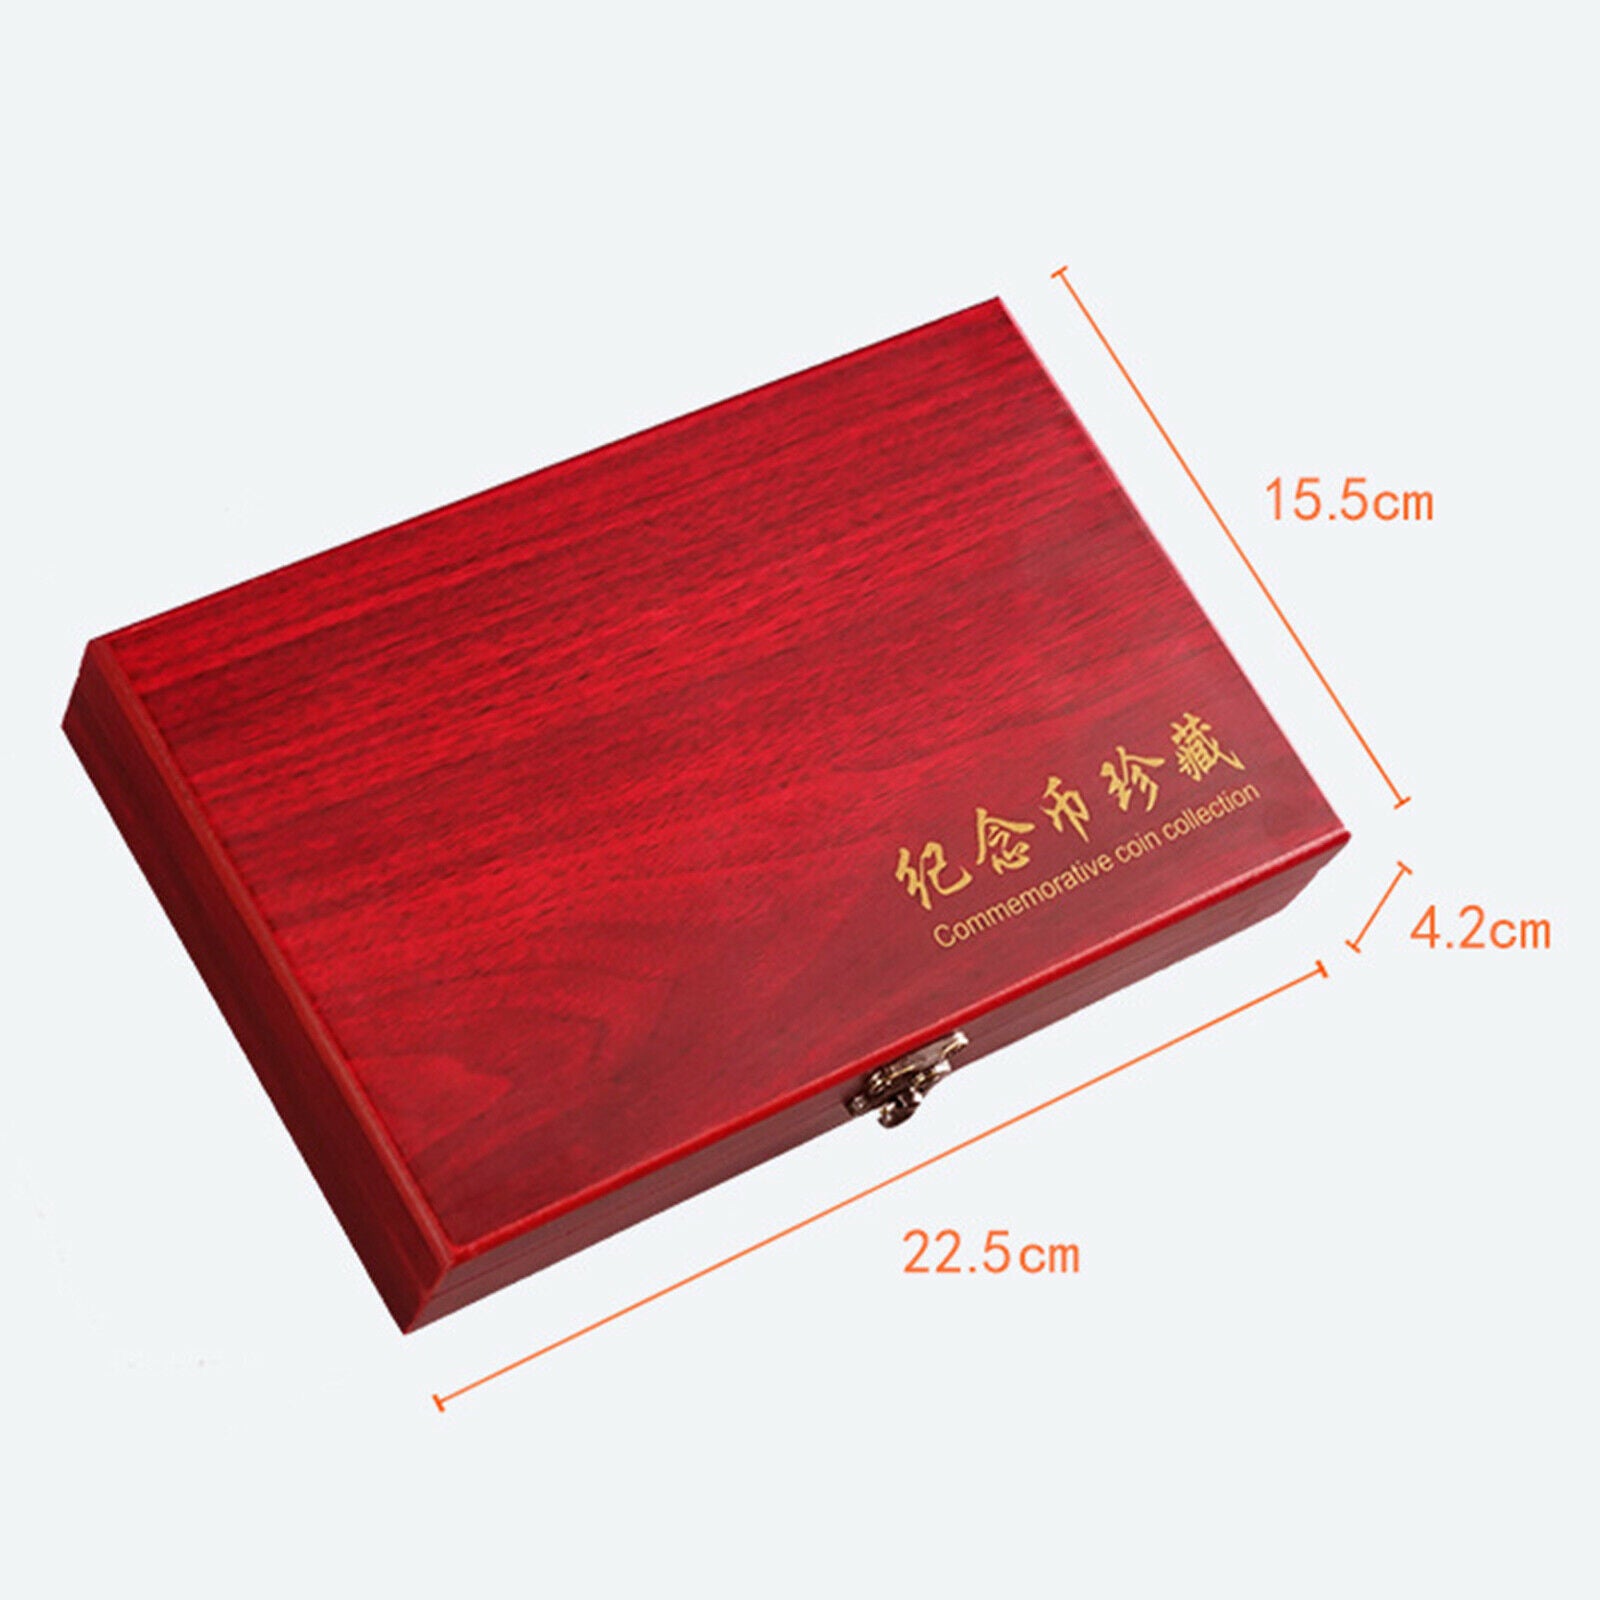 Display Box Storage Organizer Case Decorative Coin Capsule 20/25/27/30mm